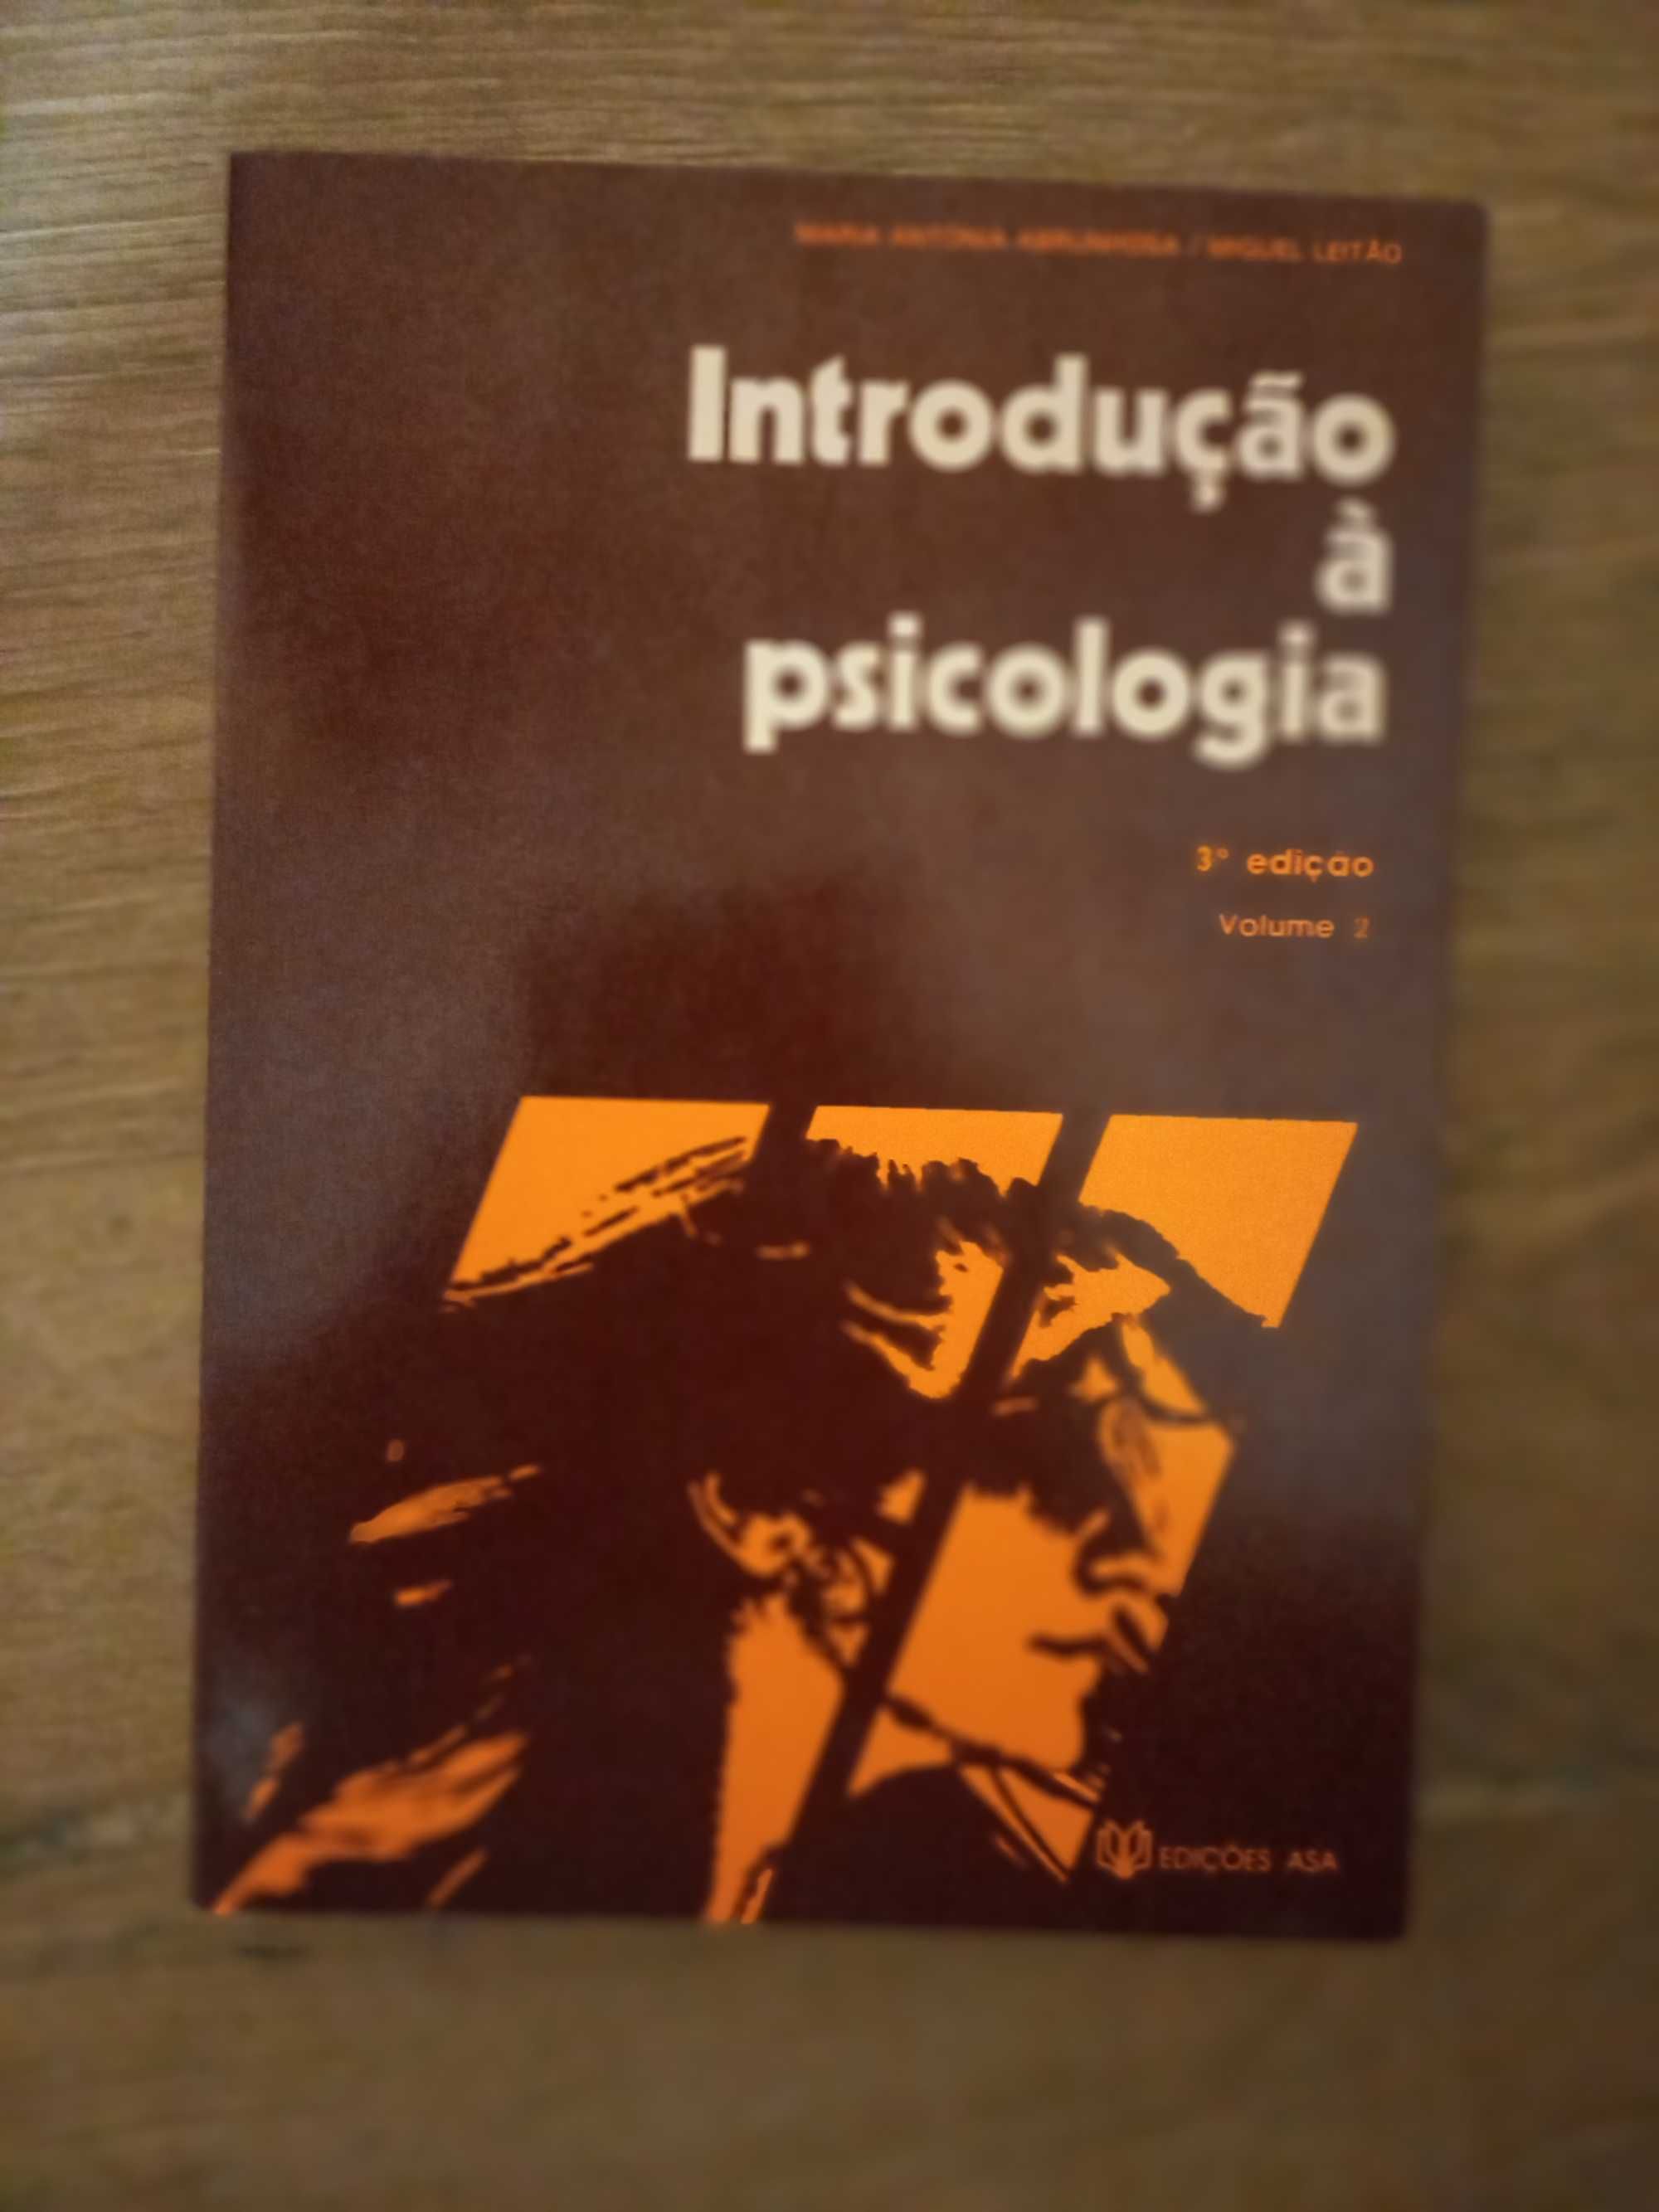 Livros de Psicologia, Sociologia e Filosofia